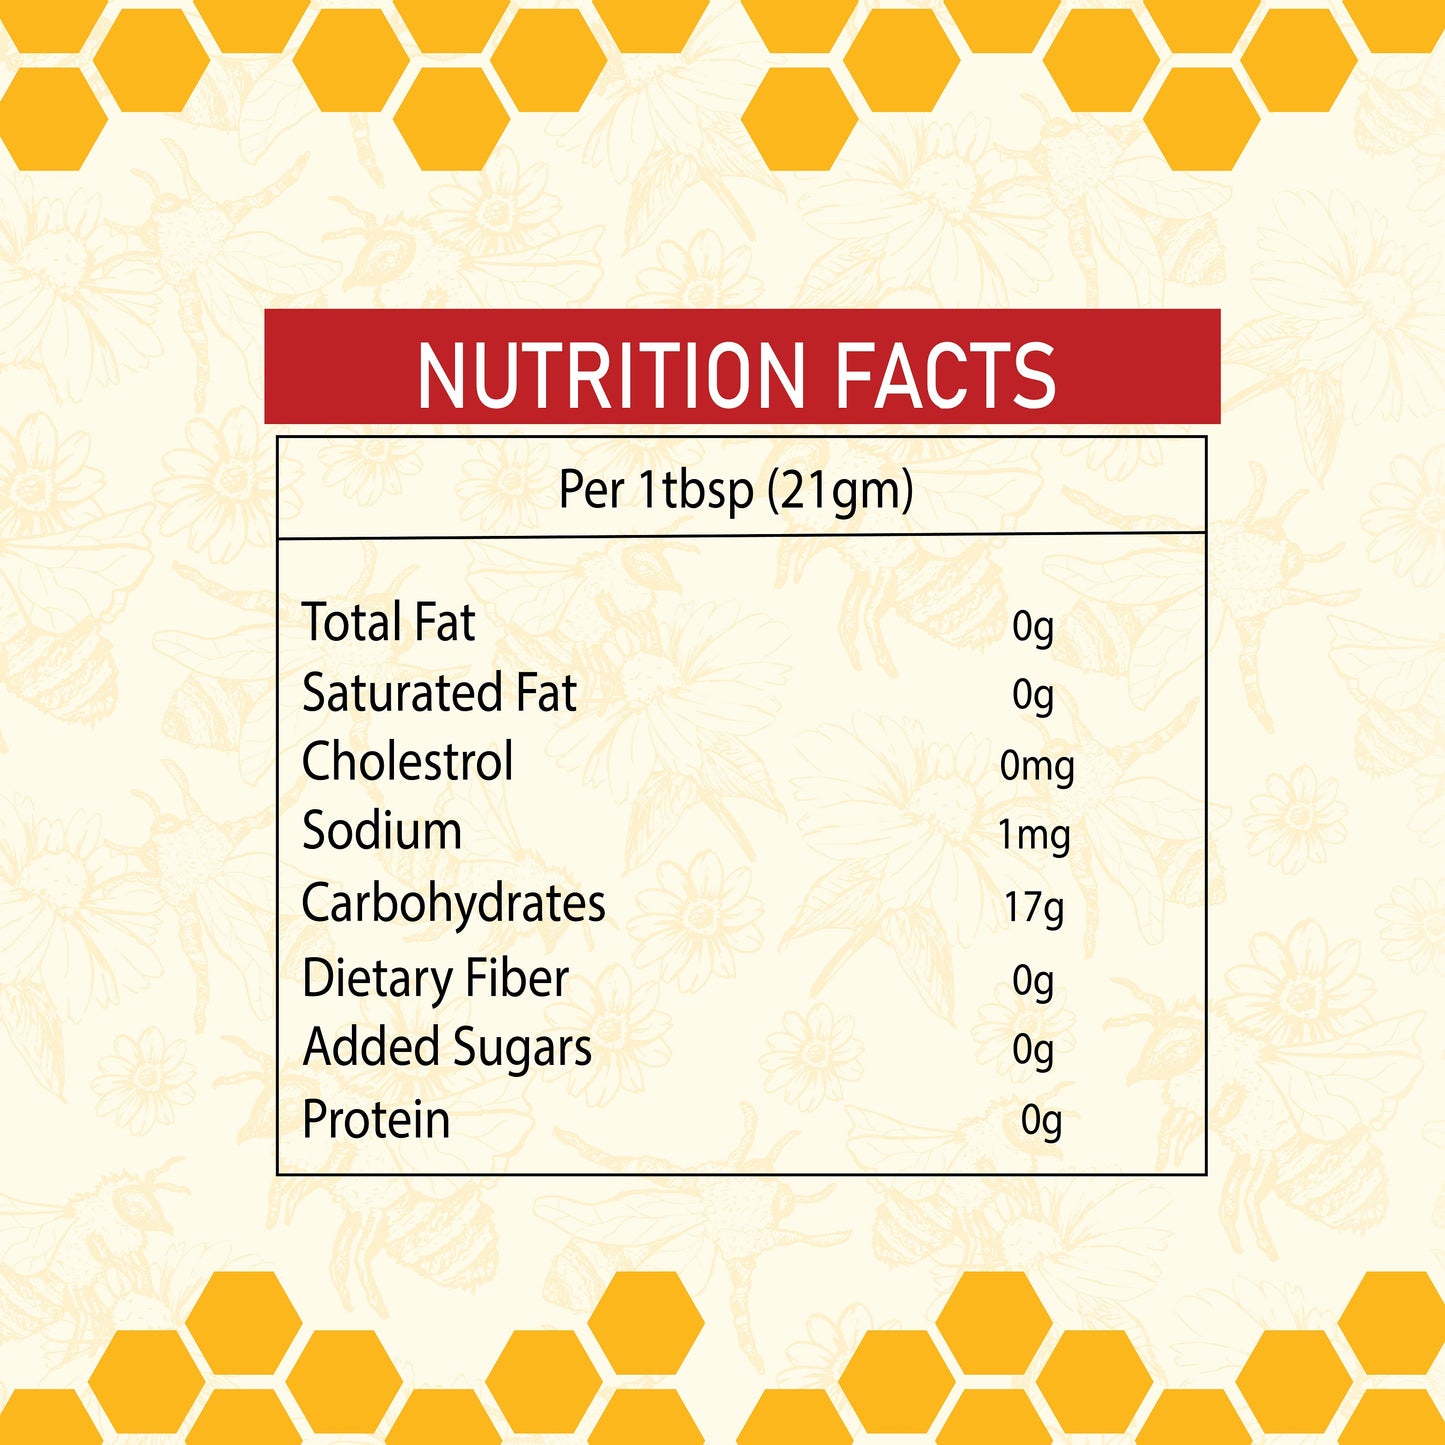 SIDR Honey (Raw, Unprocessed, Unfiltered, Pure & Premium Honey) Jujube Berry